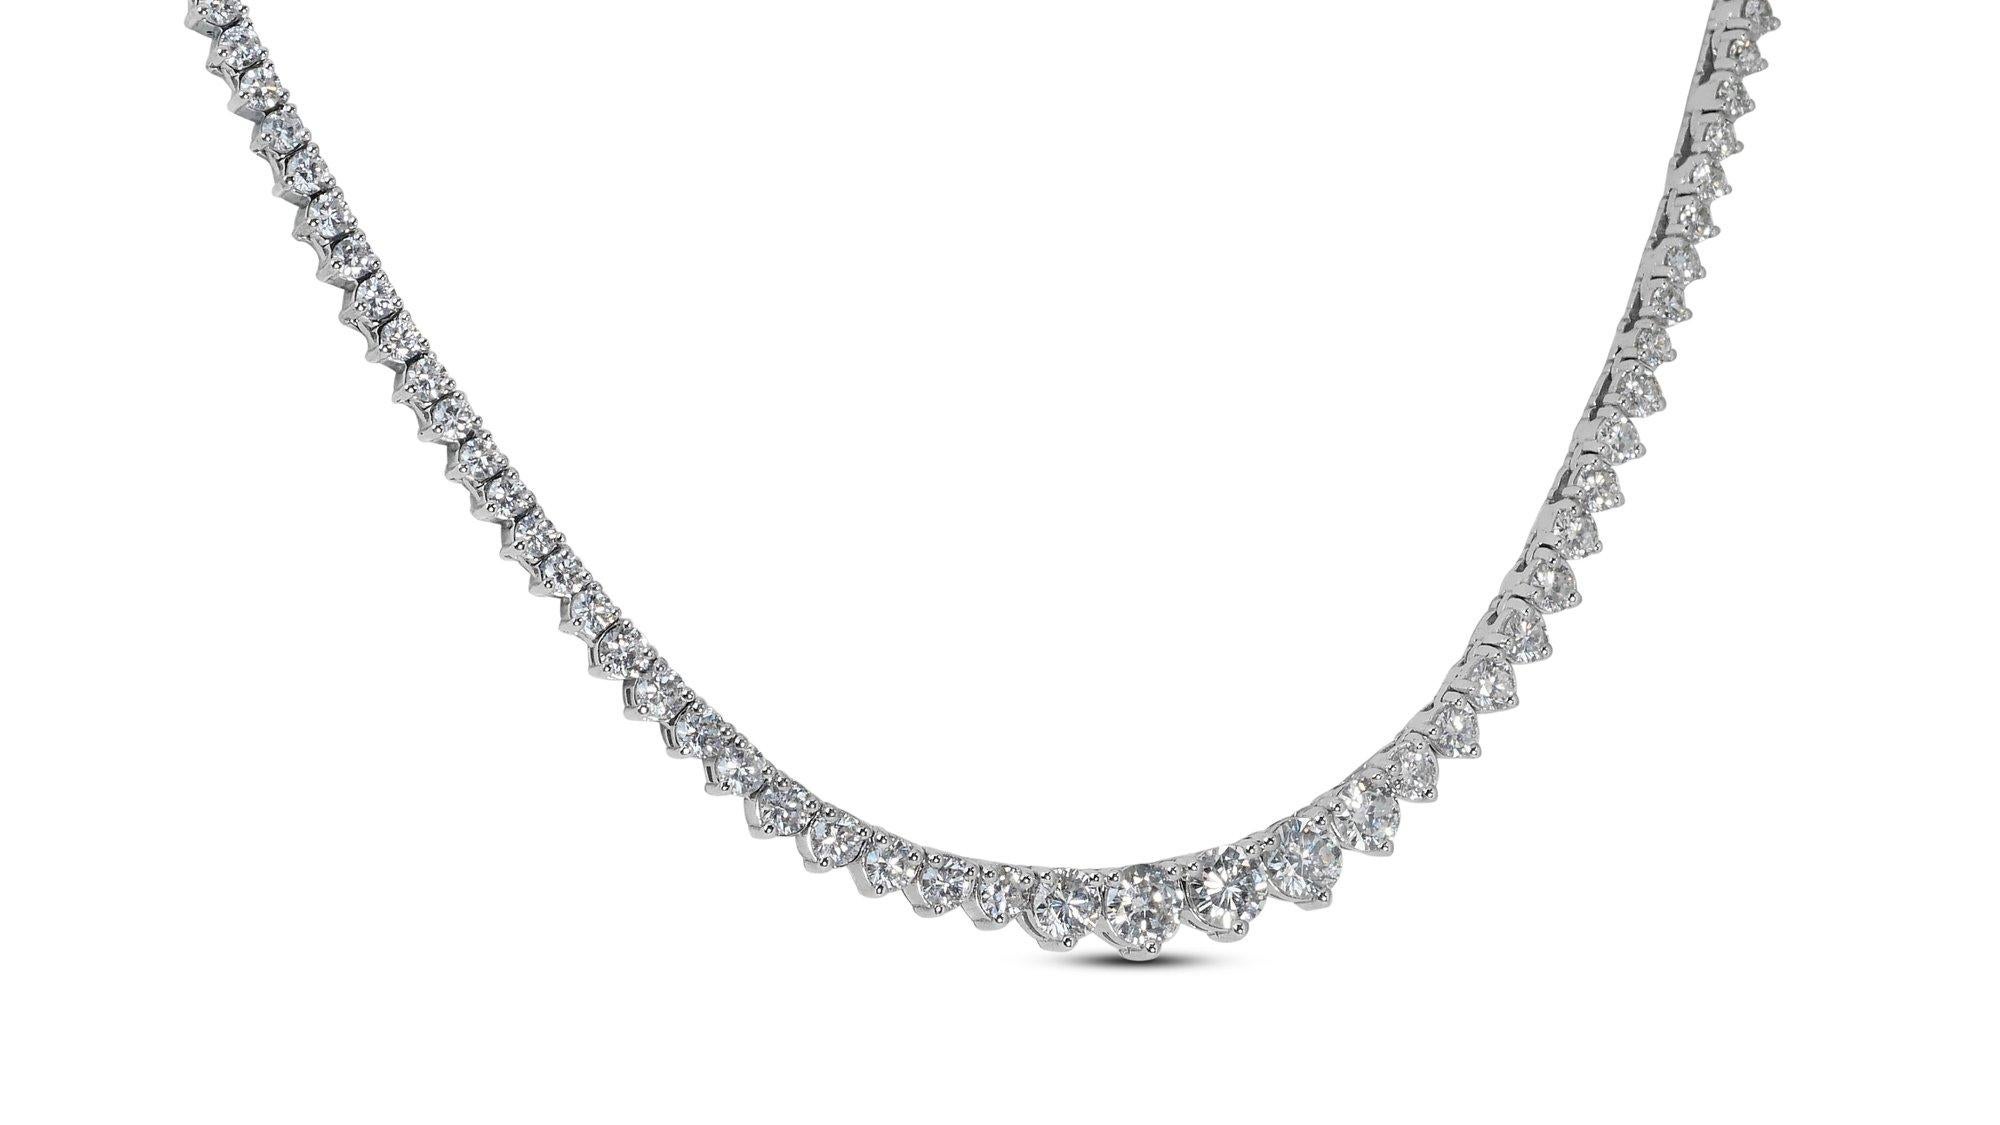 Ravishing 18k White Gold Necklace w/ 5.78 ct Natural Diamonds IGI Certificate For Sale 10